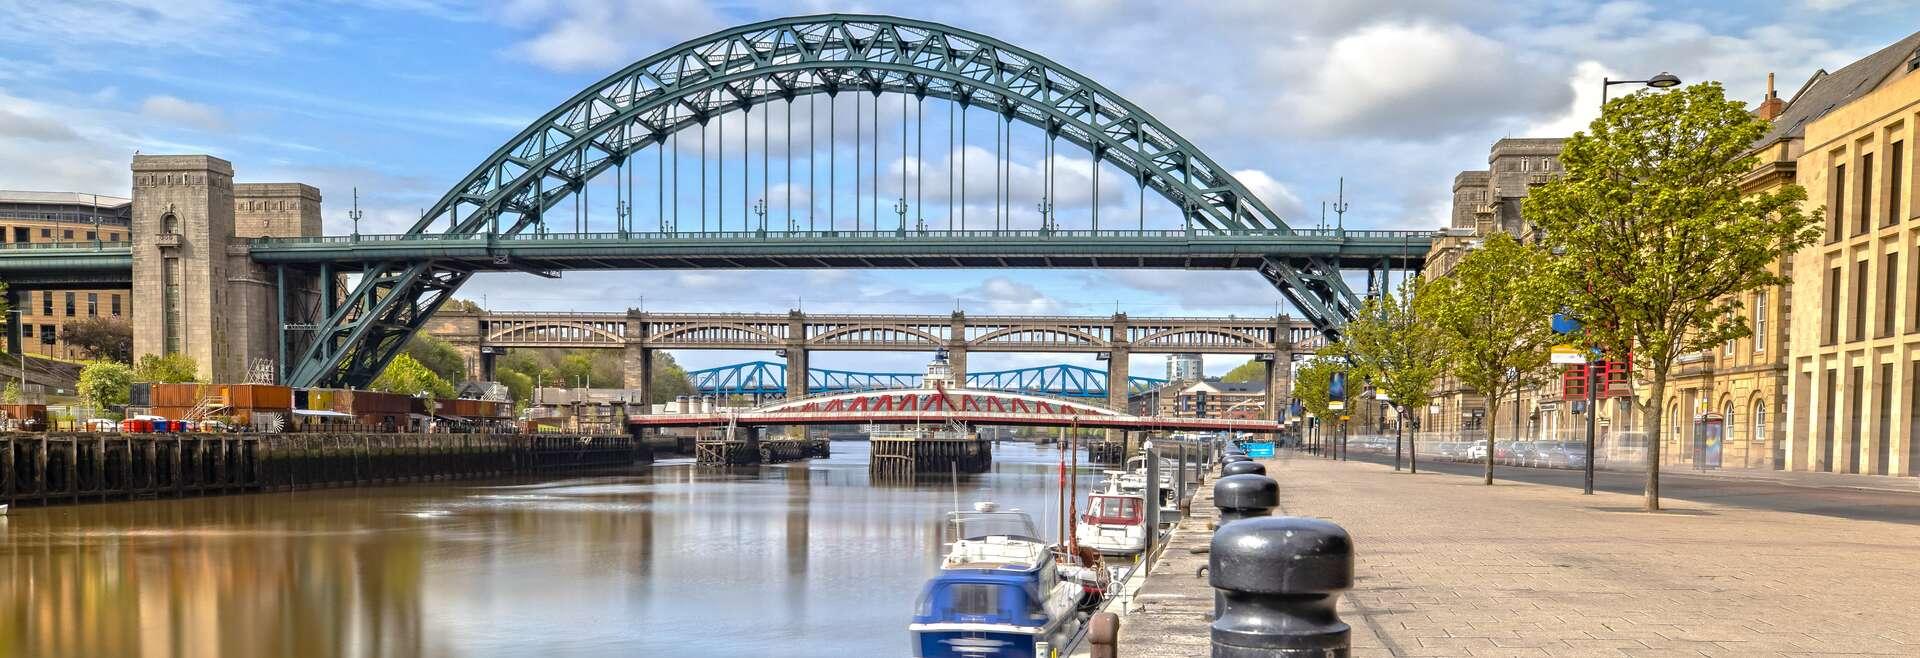 Sprachaufenthalt England, Newcastle Upon Tyne, Brücken